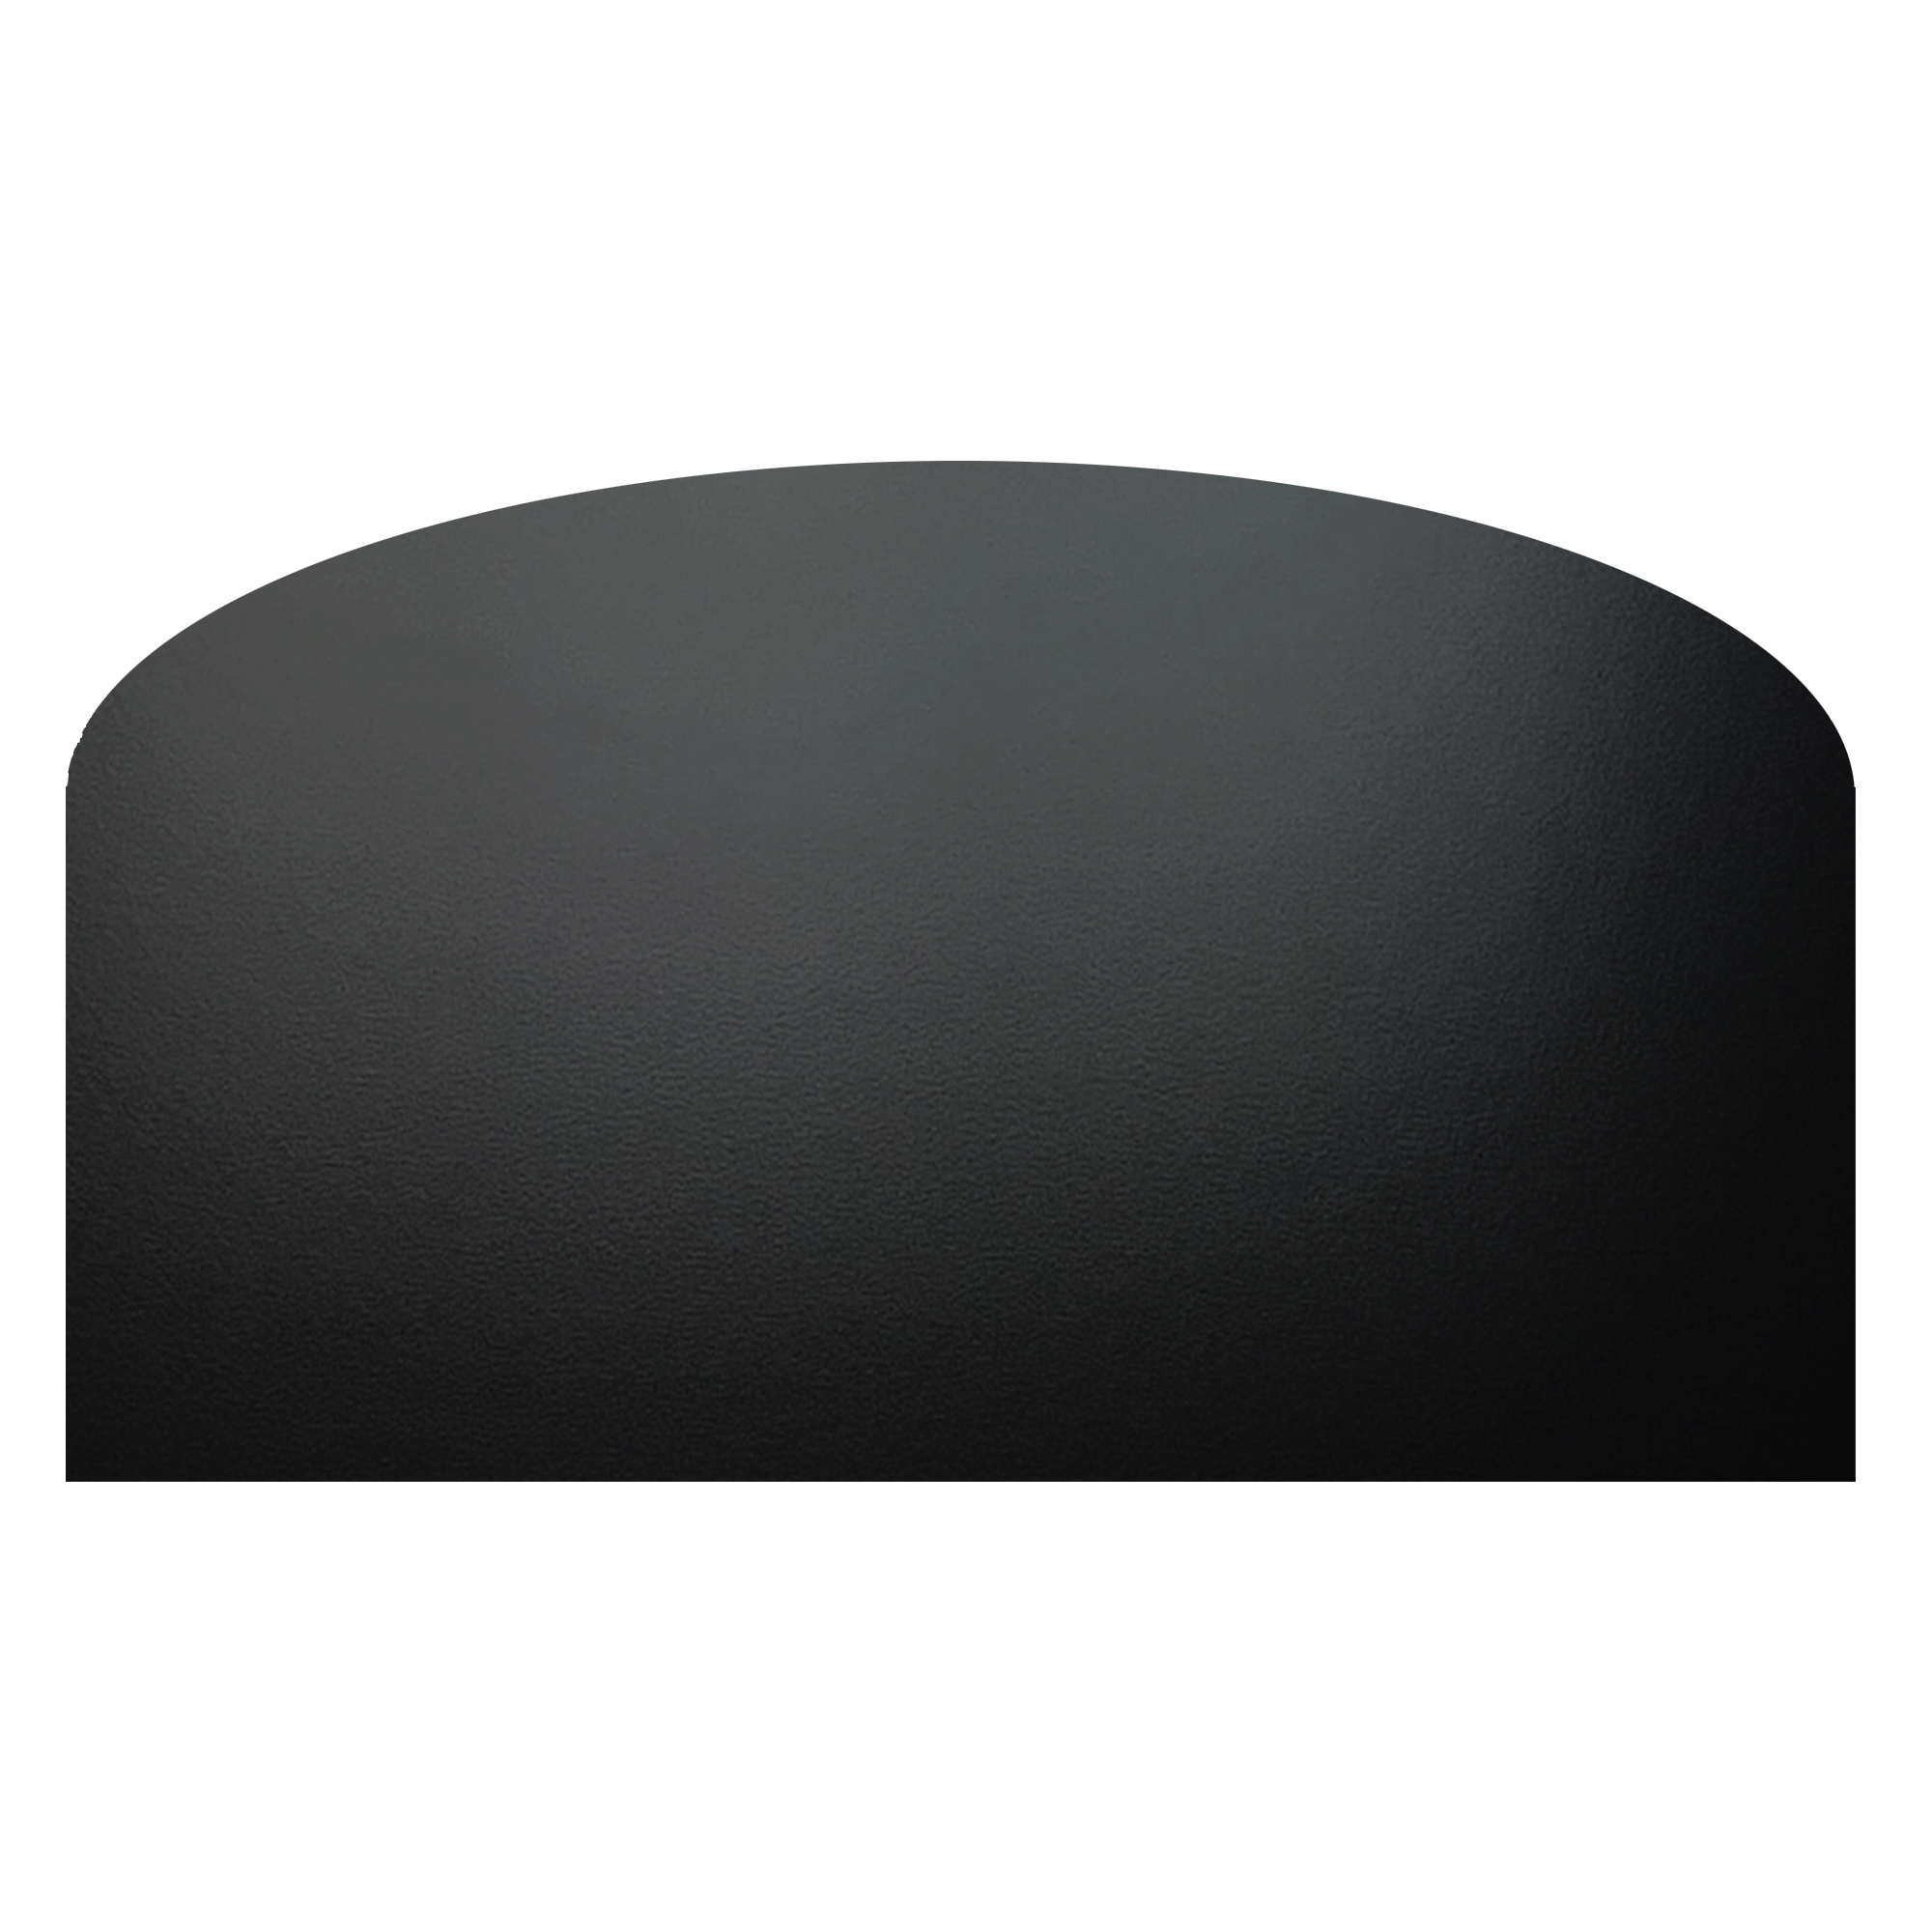 Funkenschutzplatte D-Form 100 x 55 x 0,15 cm Stahlblech schwarz + product picture